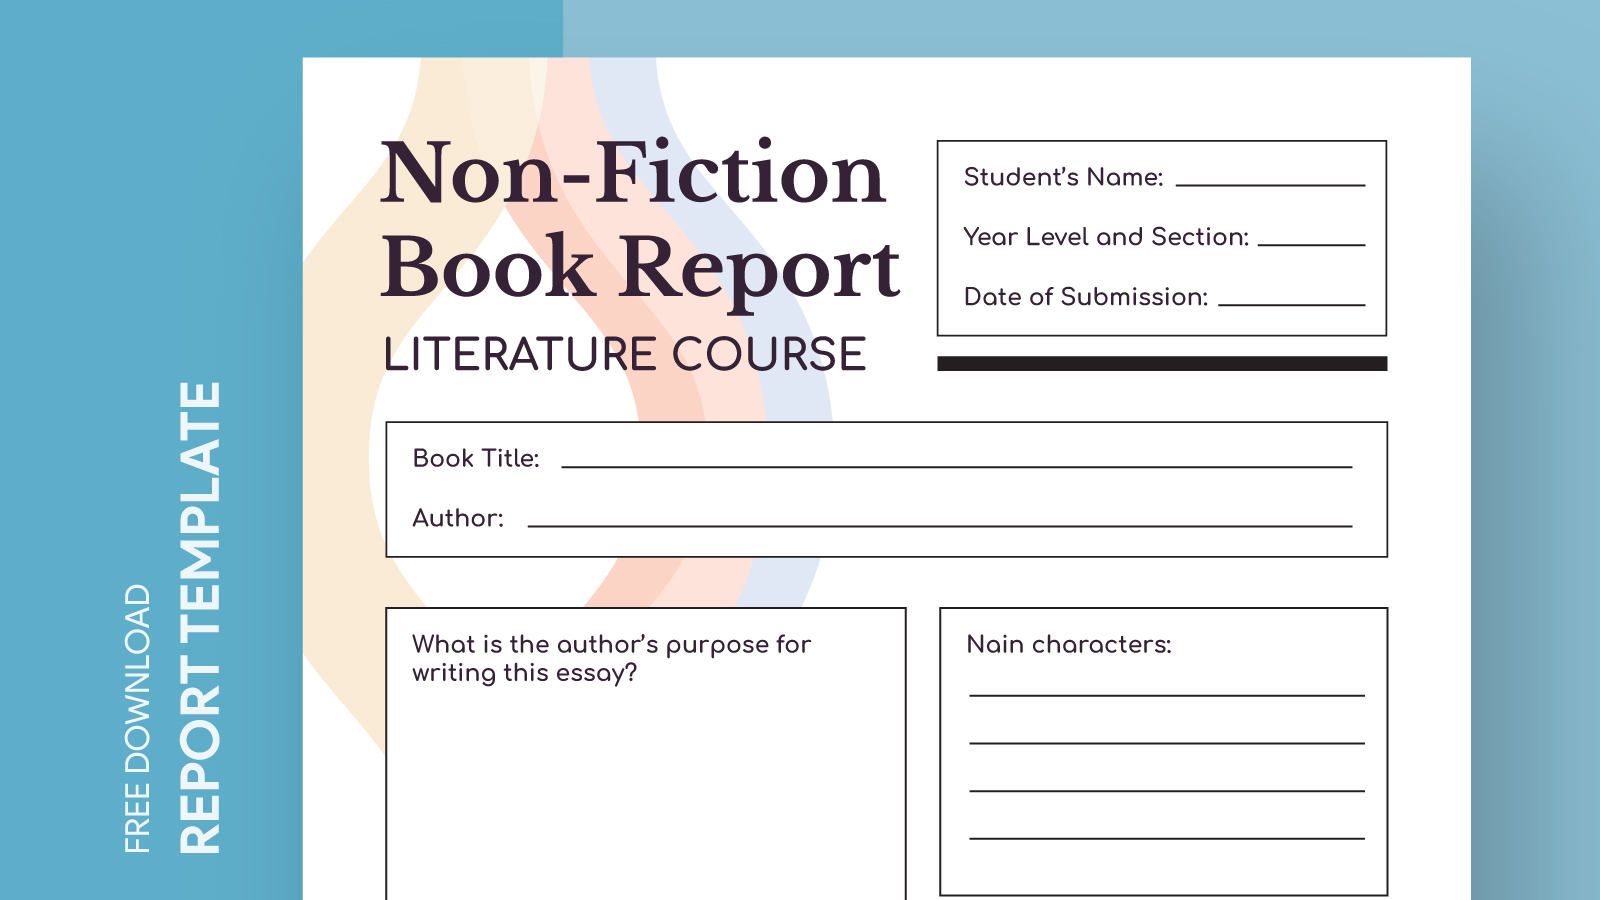 Nonfiction Book Report Free Google Docs Template gdoc.io